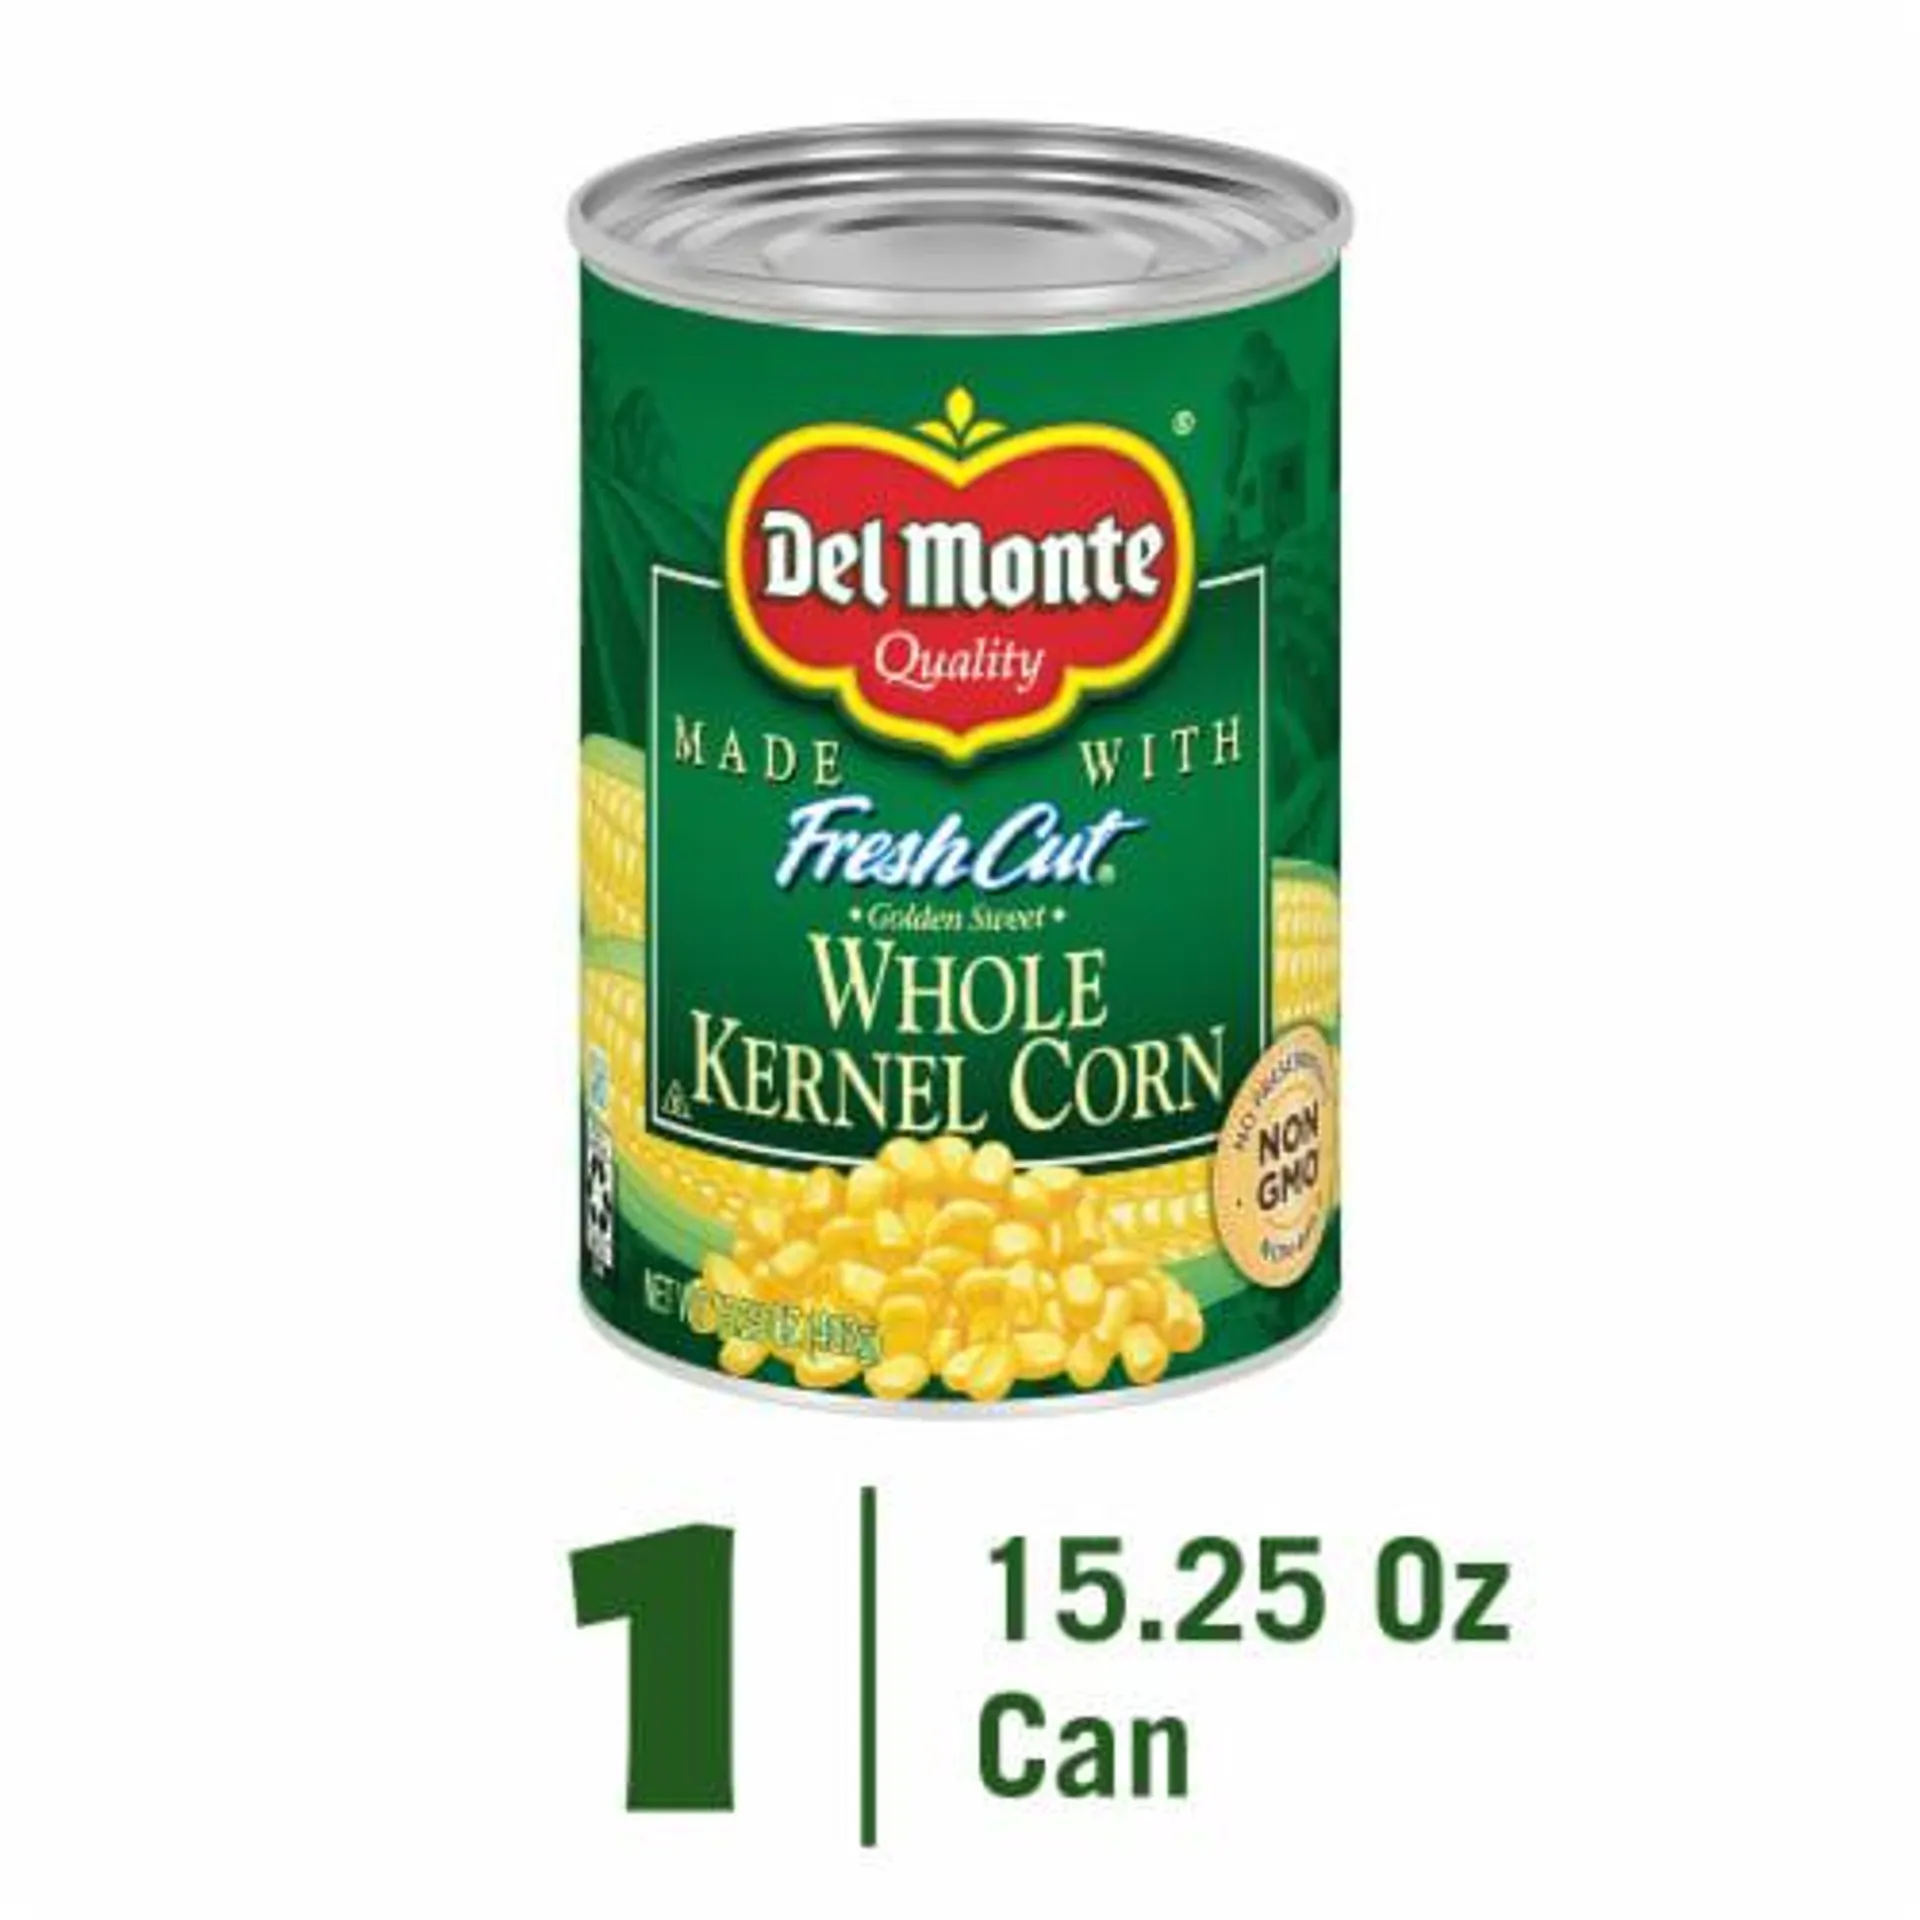 Del Monte® Fresh Cut Golden Sweet Whole Kernel Corn Canned Vegetables